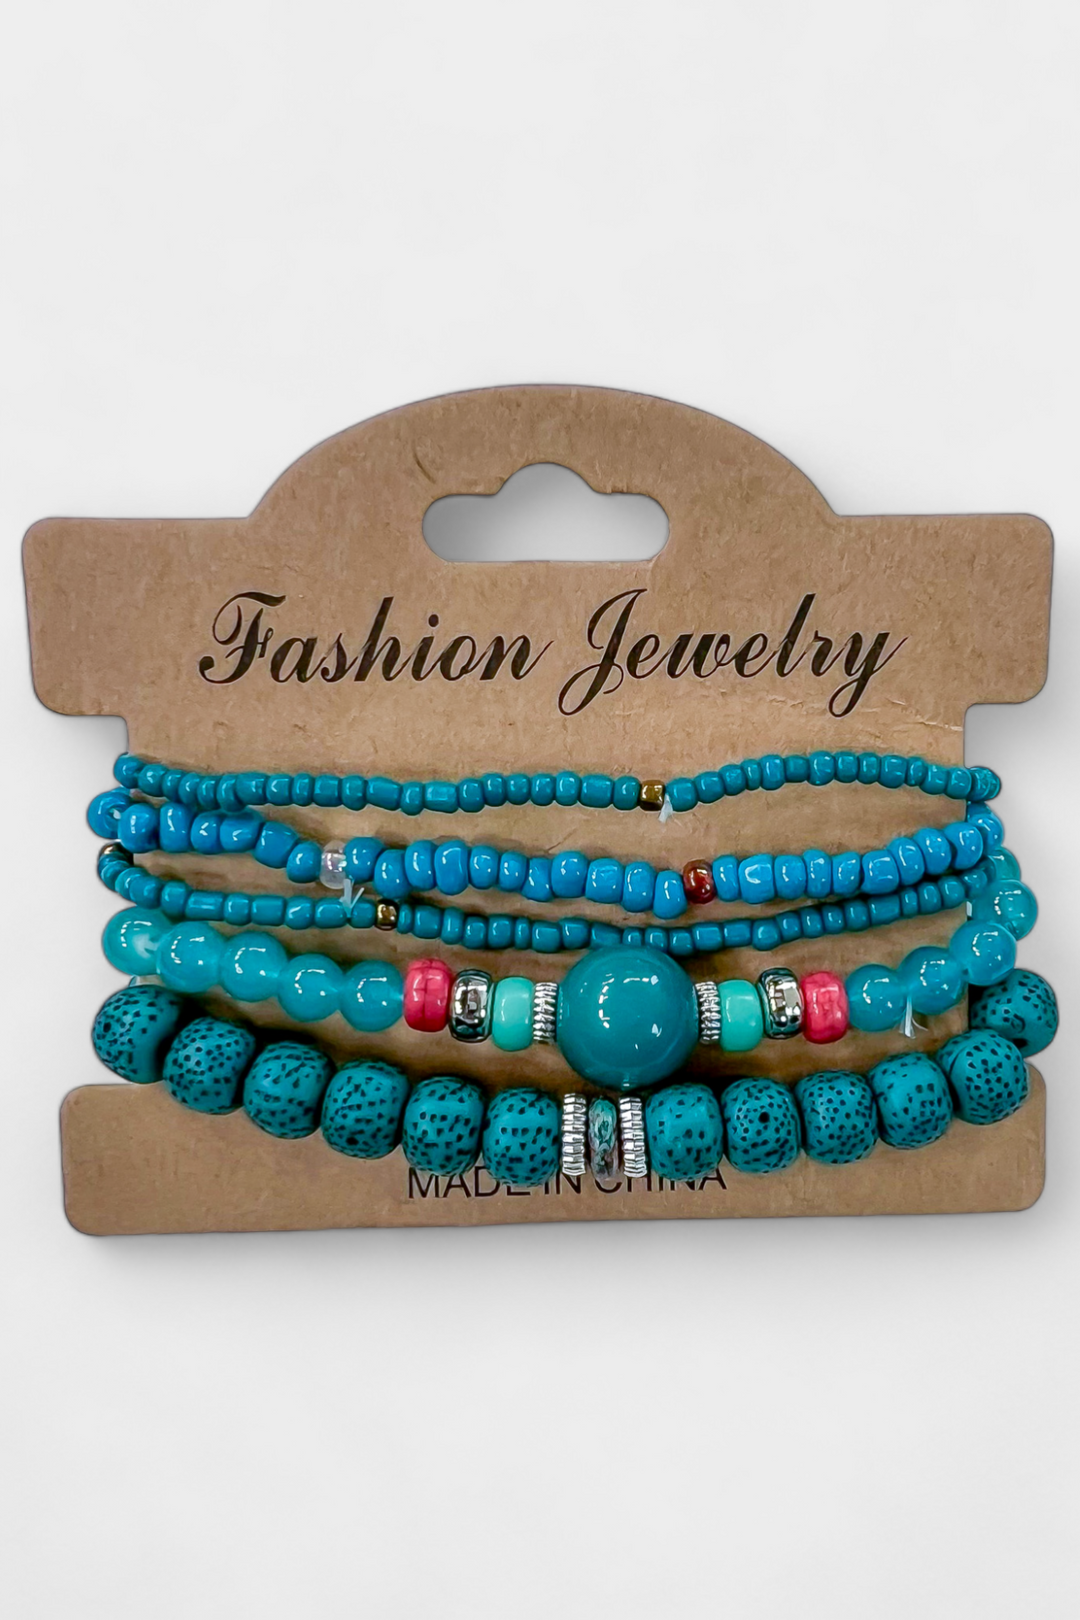 Turquoise Mixed Bead Stretch Bracelet Set